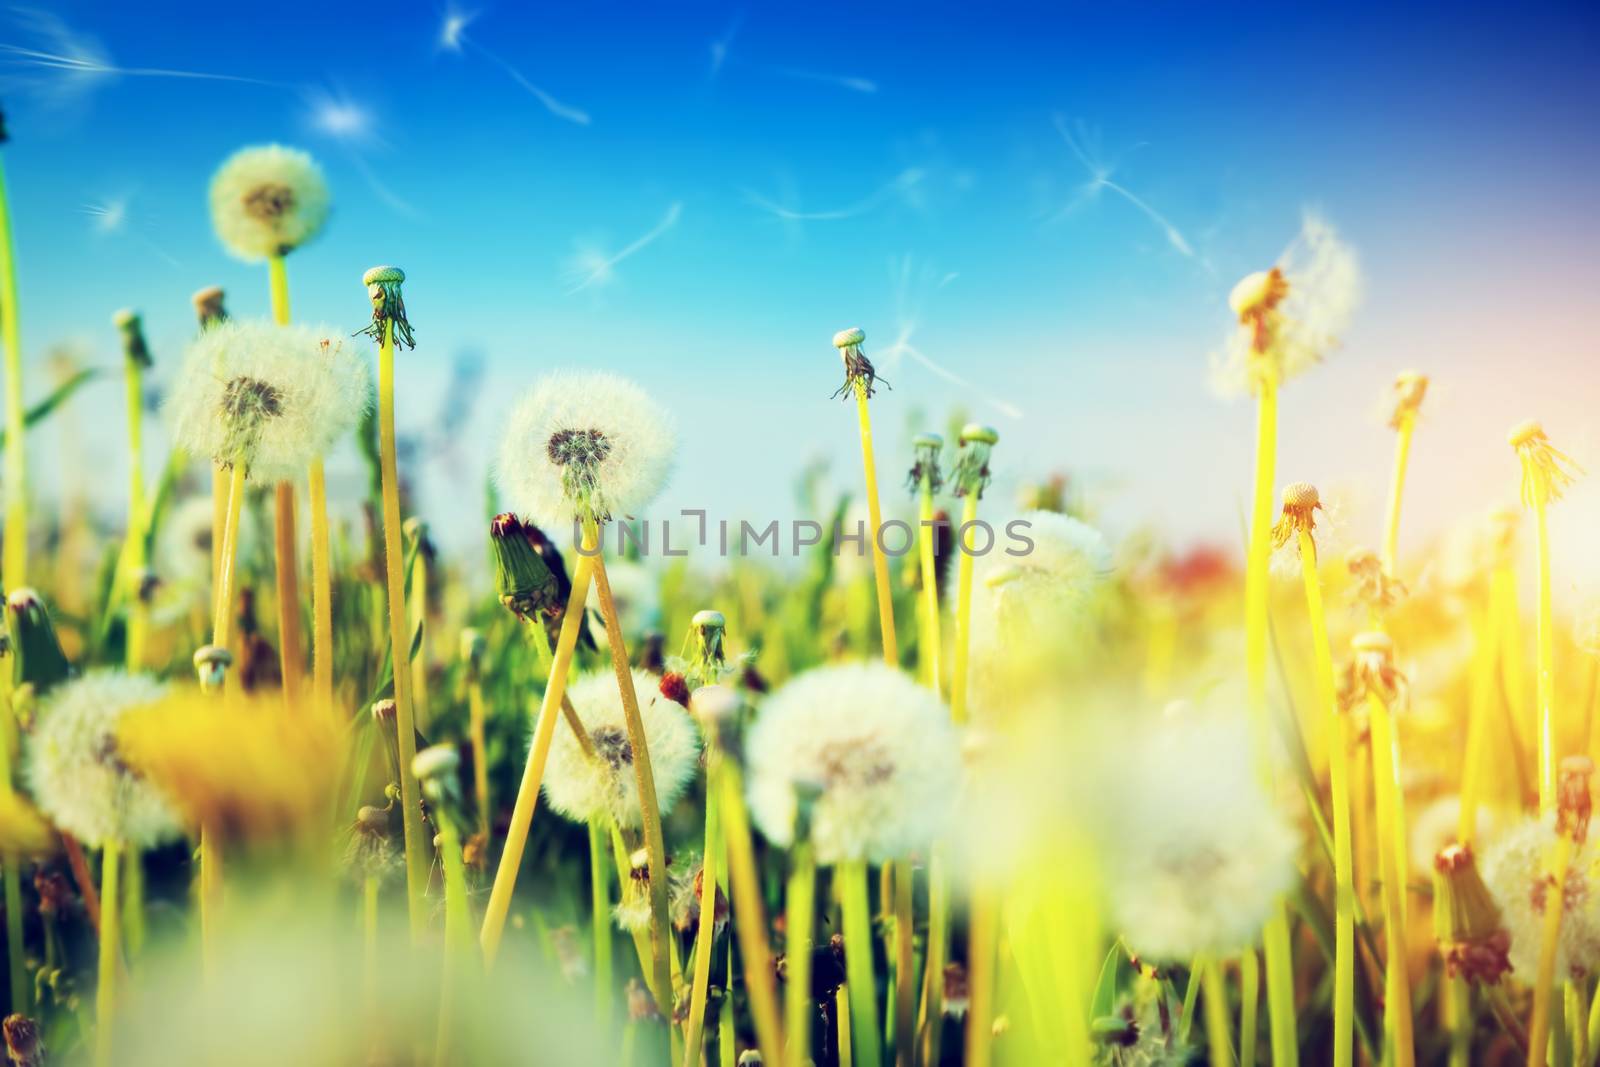 Spring field with flowers, dandelions in fresh grass. Sun shining on blue sky